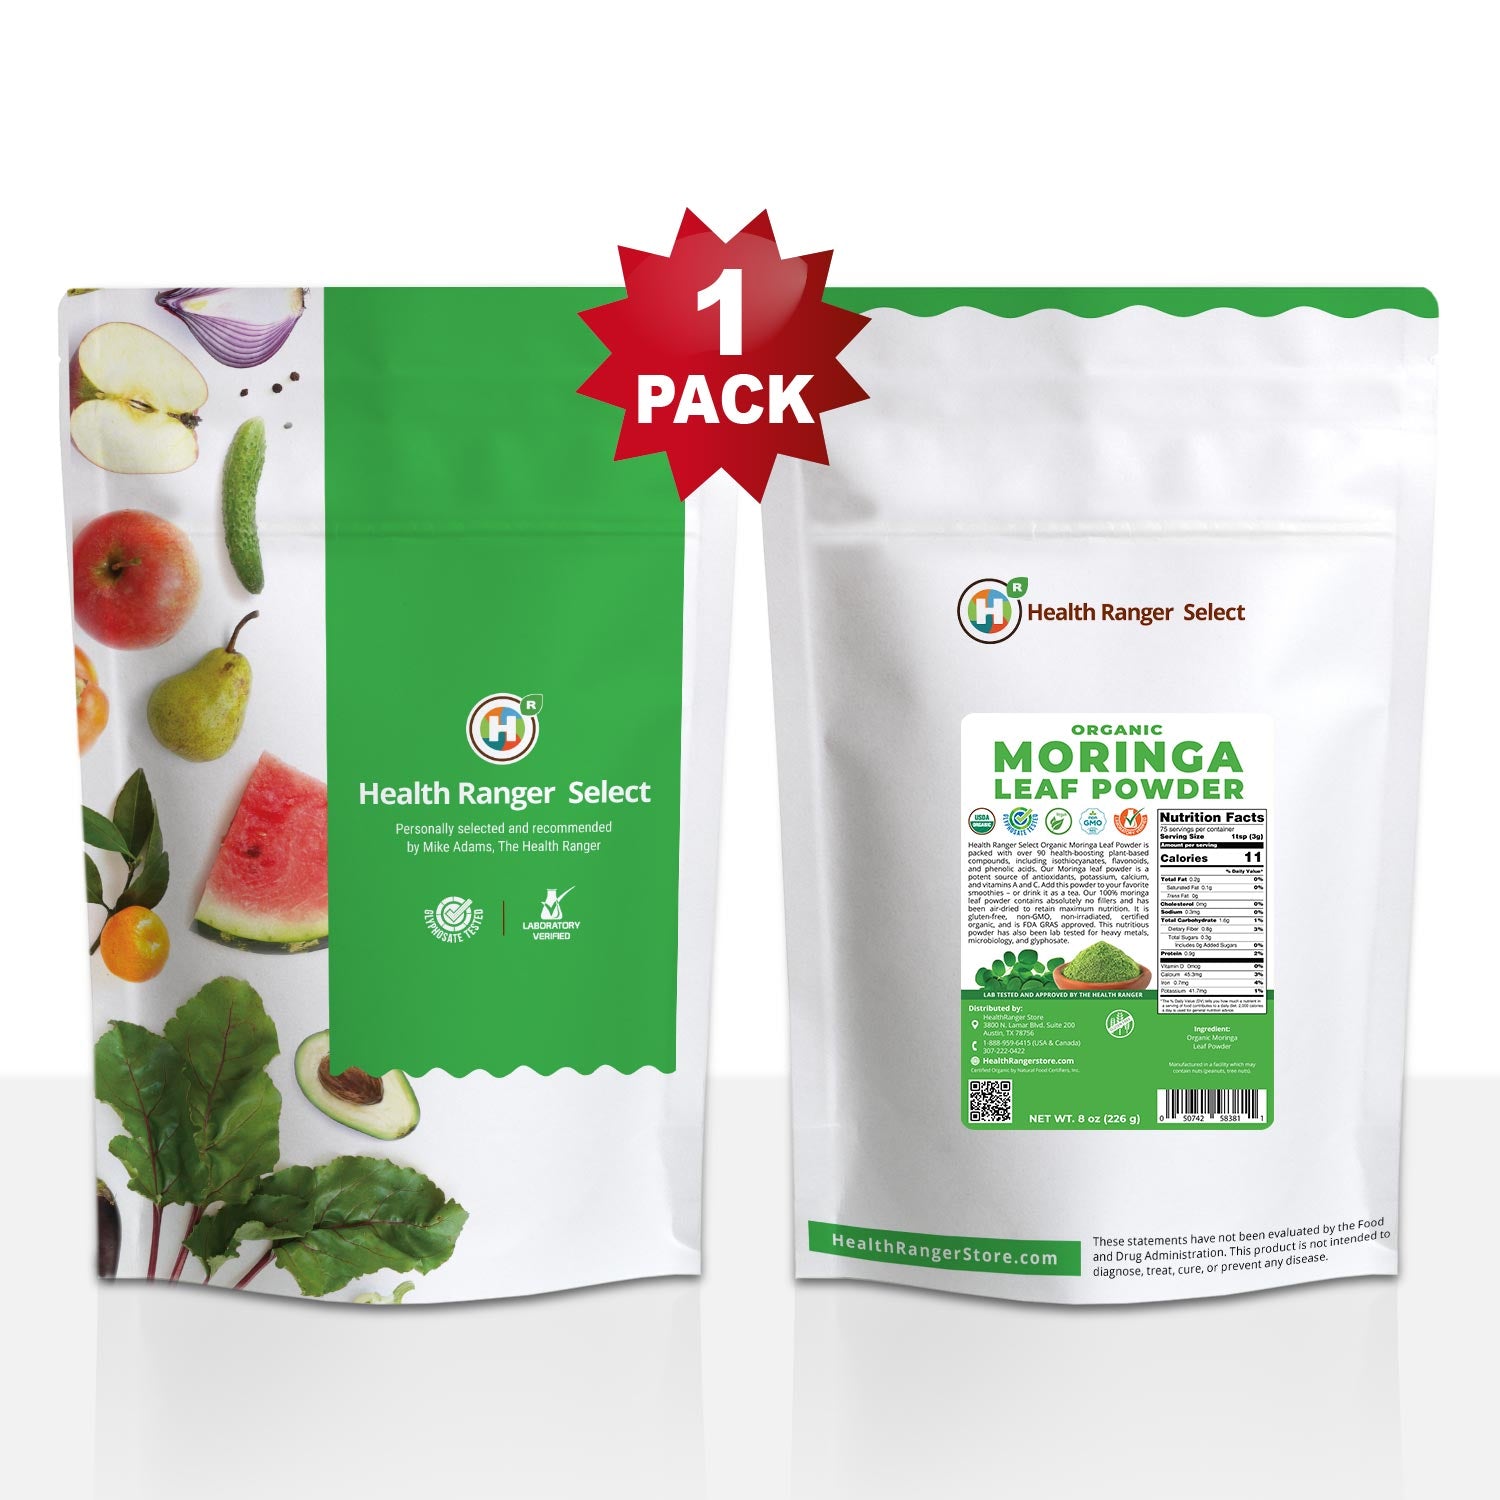 Organic Moringa Leaf Powder 8 oz (226g)